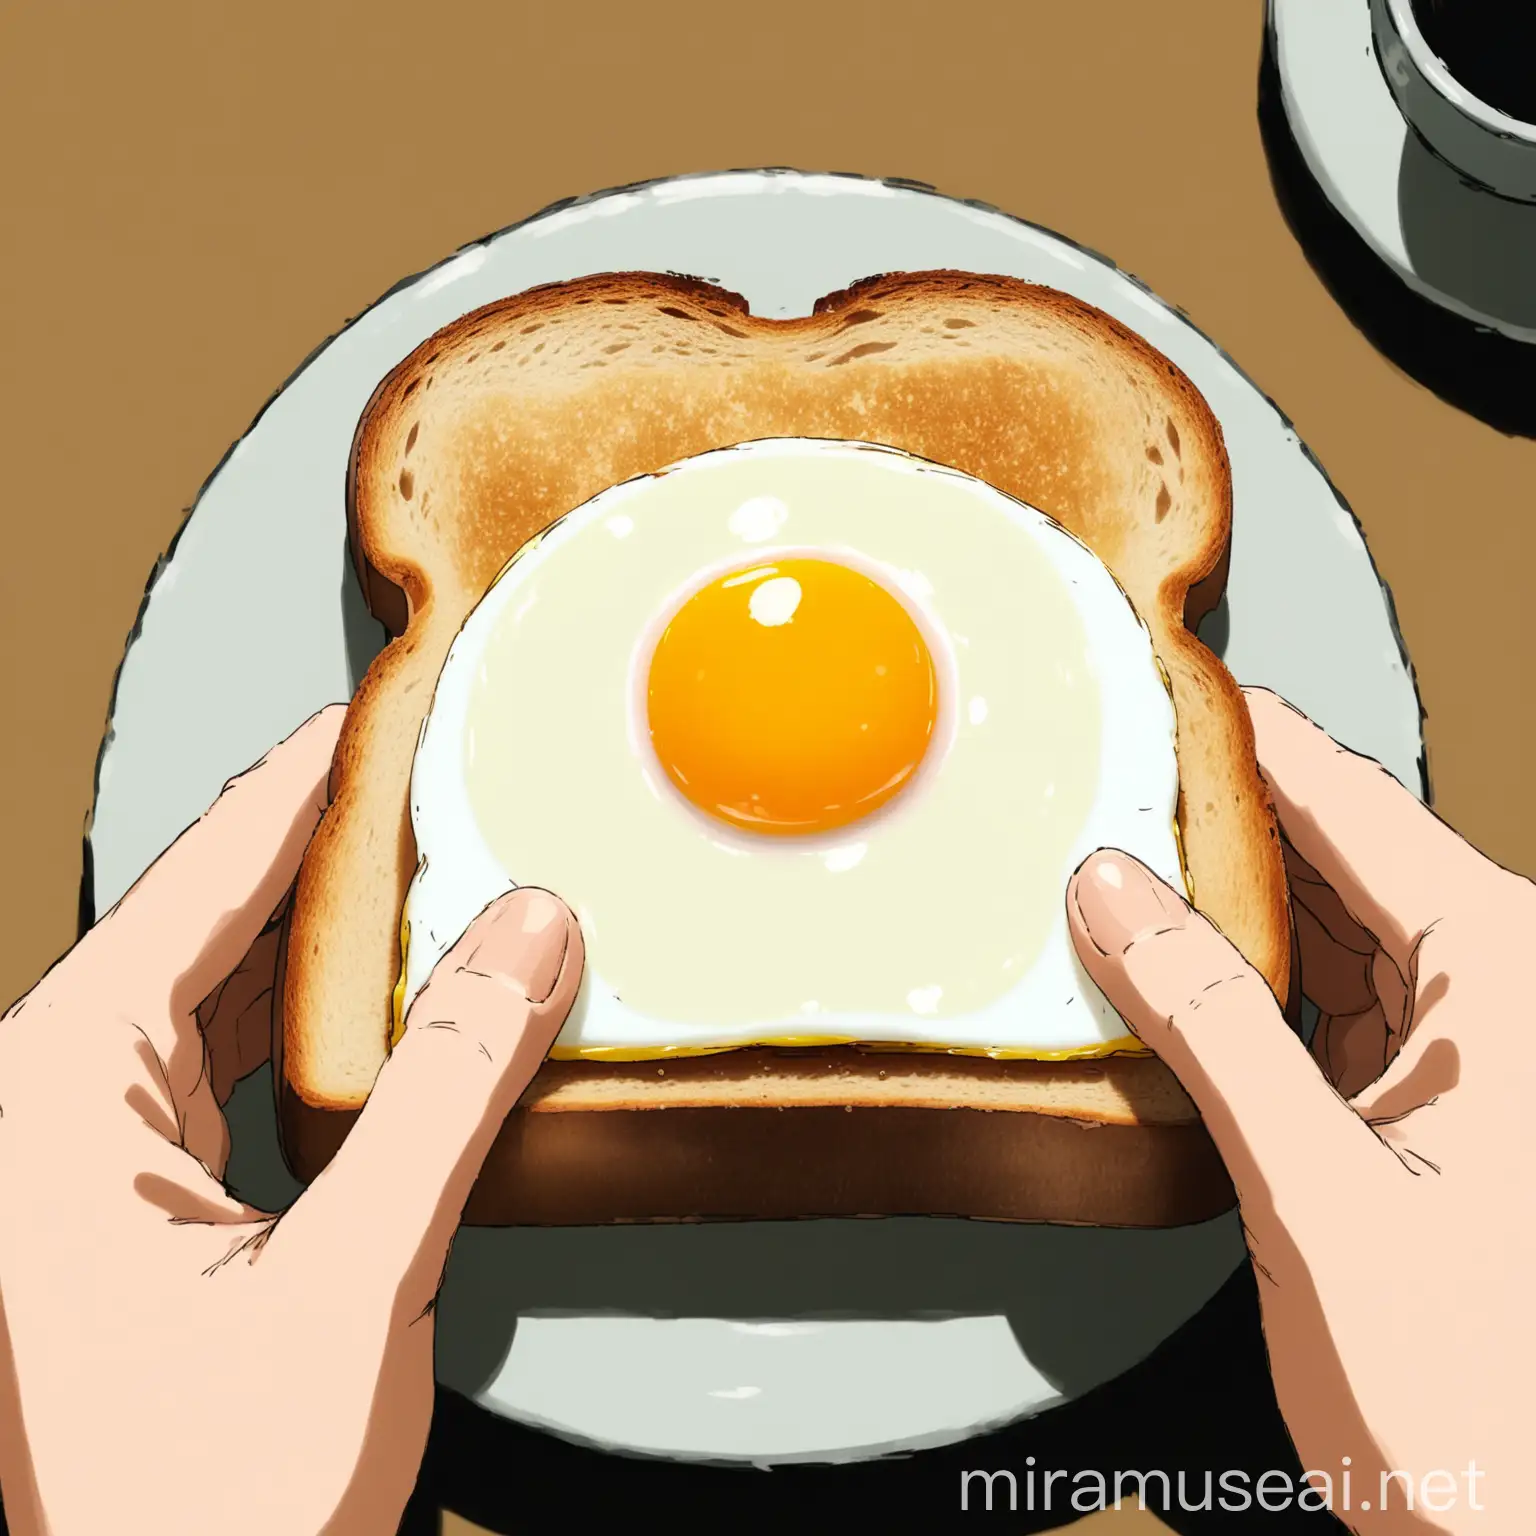 GhibliInspired Breakfast Toast with SunnySideUp Egg